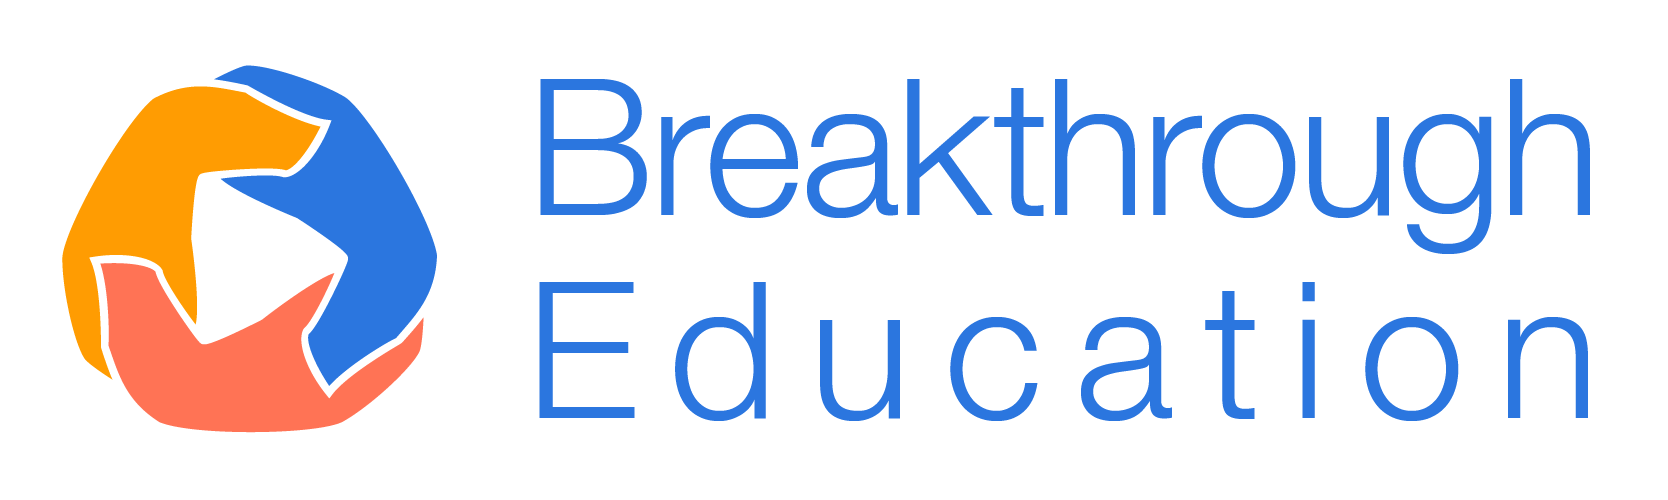 Breakthrough Education logo